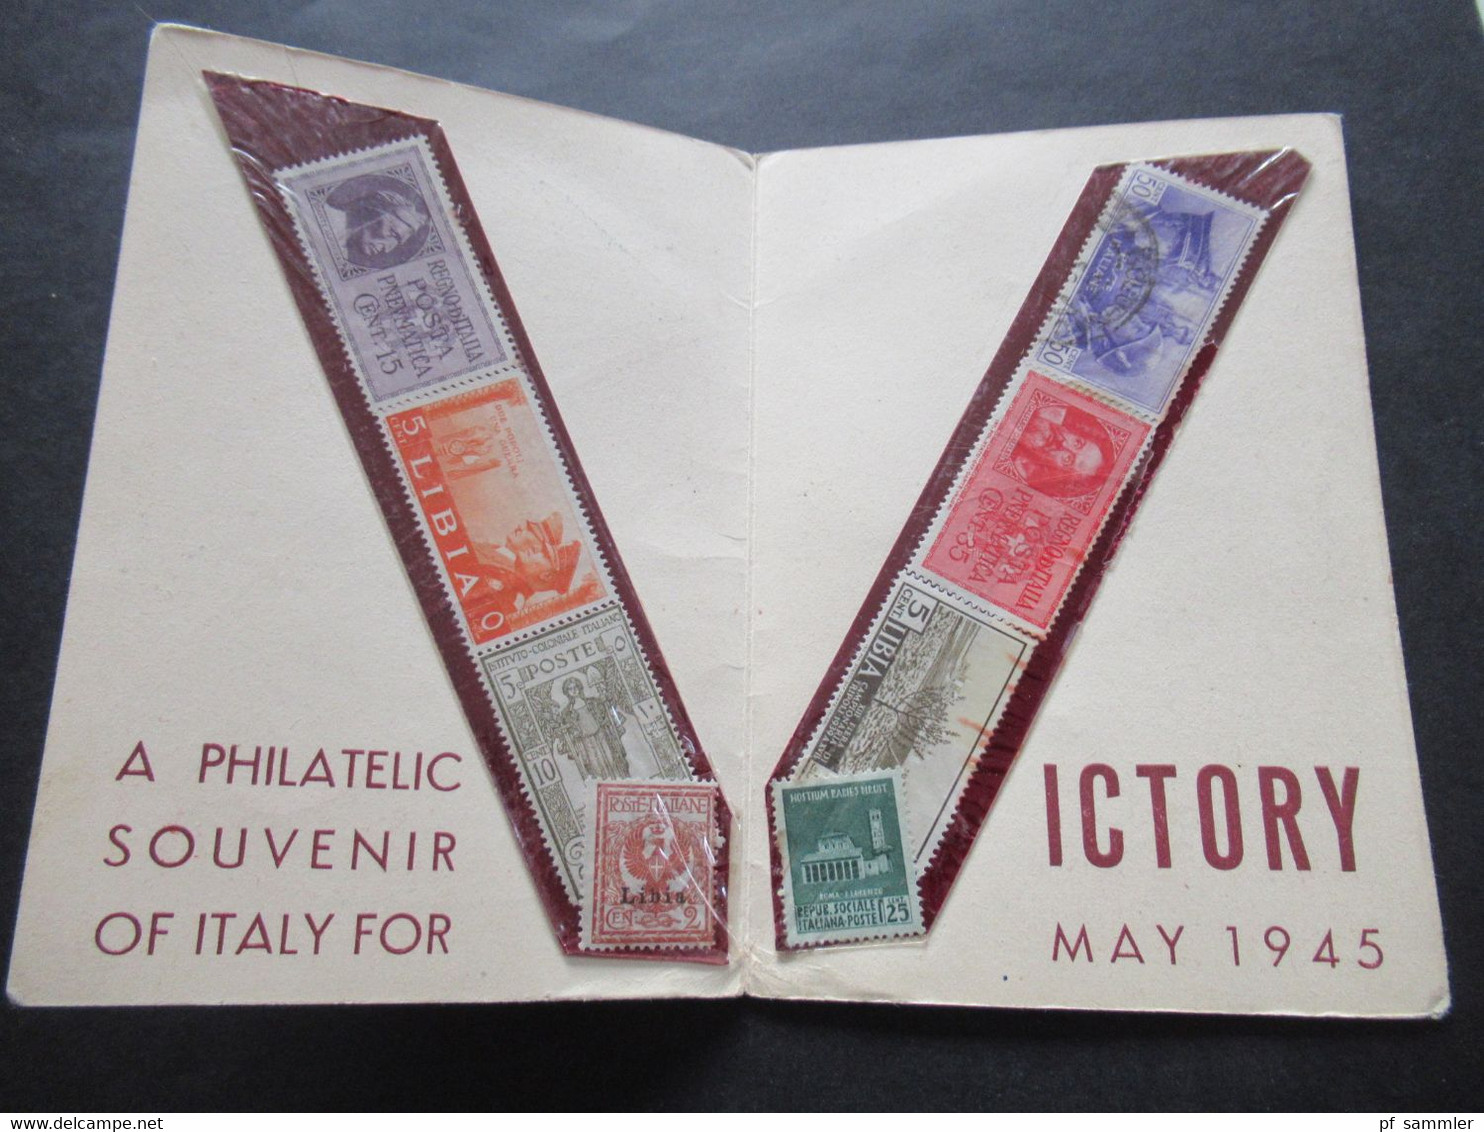 Klappkarte Mai 1945 Britische Propaganda Britisch Forces In Italy A Philatelic Souvenir Of Italy For Victory May 1945 - War Propaganda